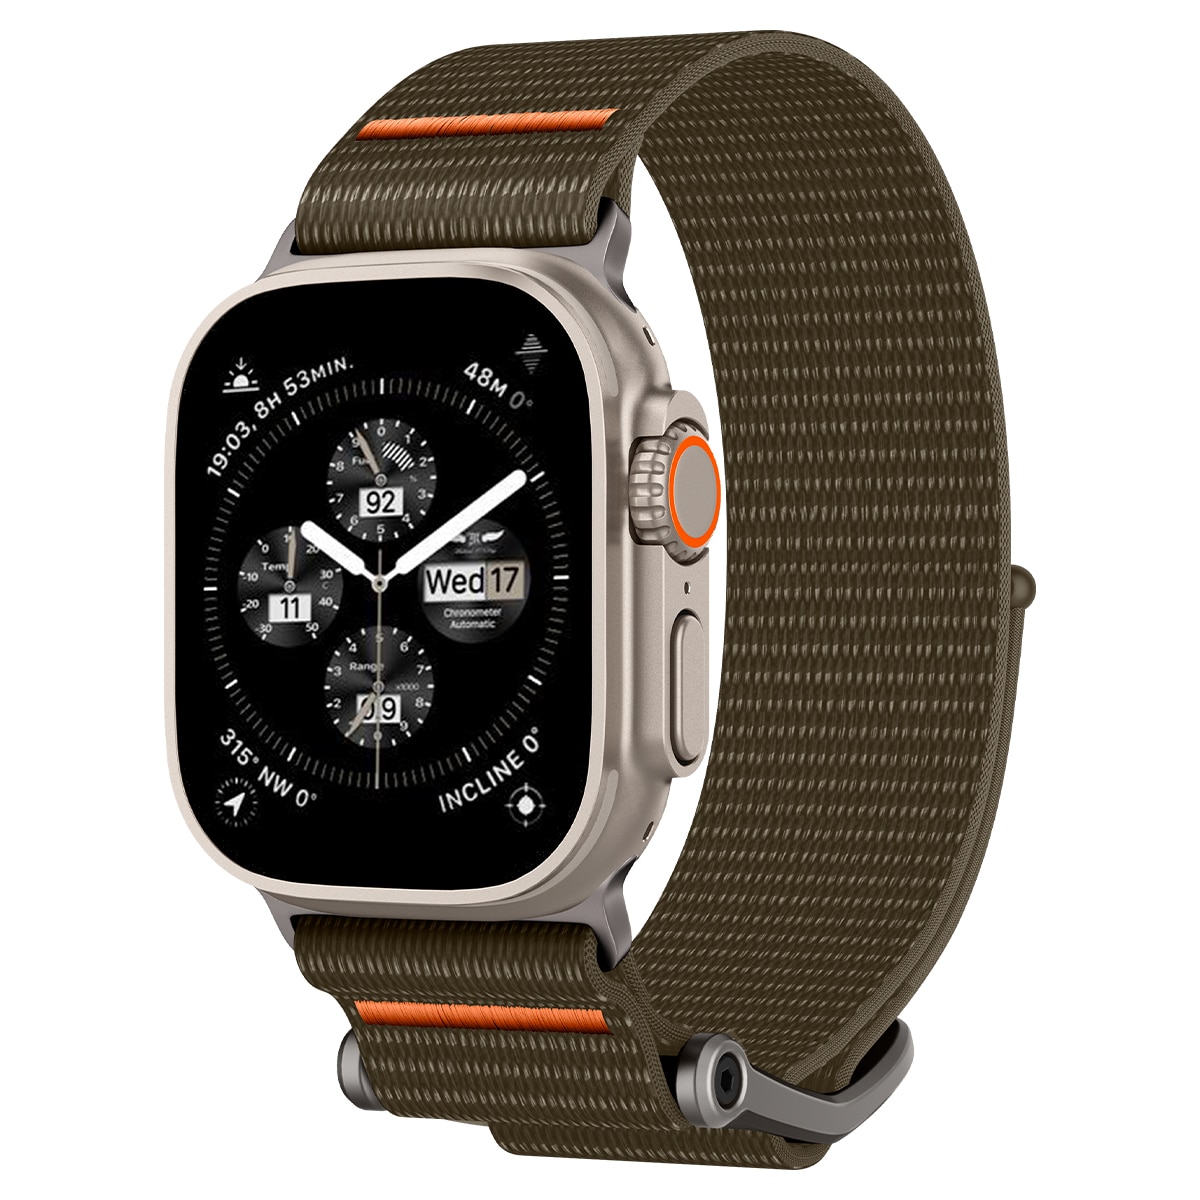 Apple Watch 45mm Series 8 DuraPro Flex Ultra Khaki